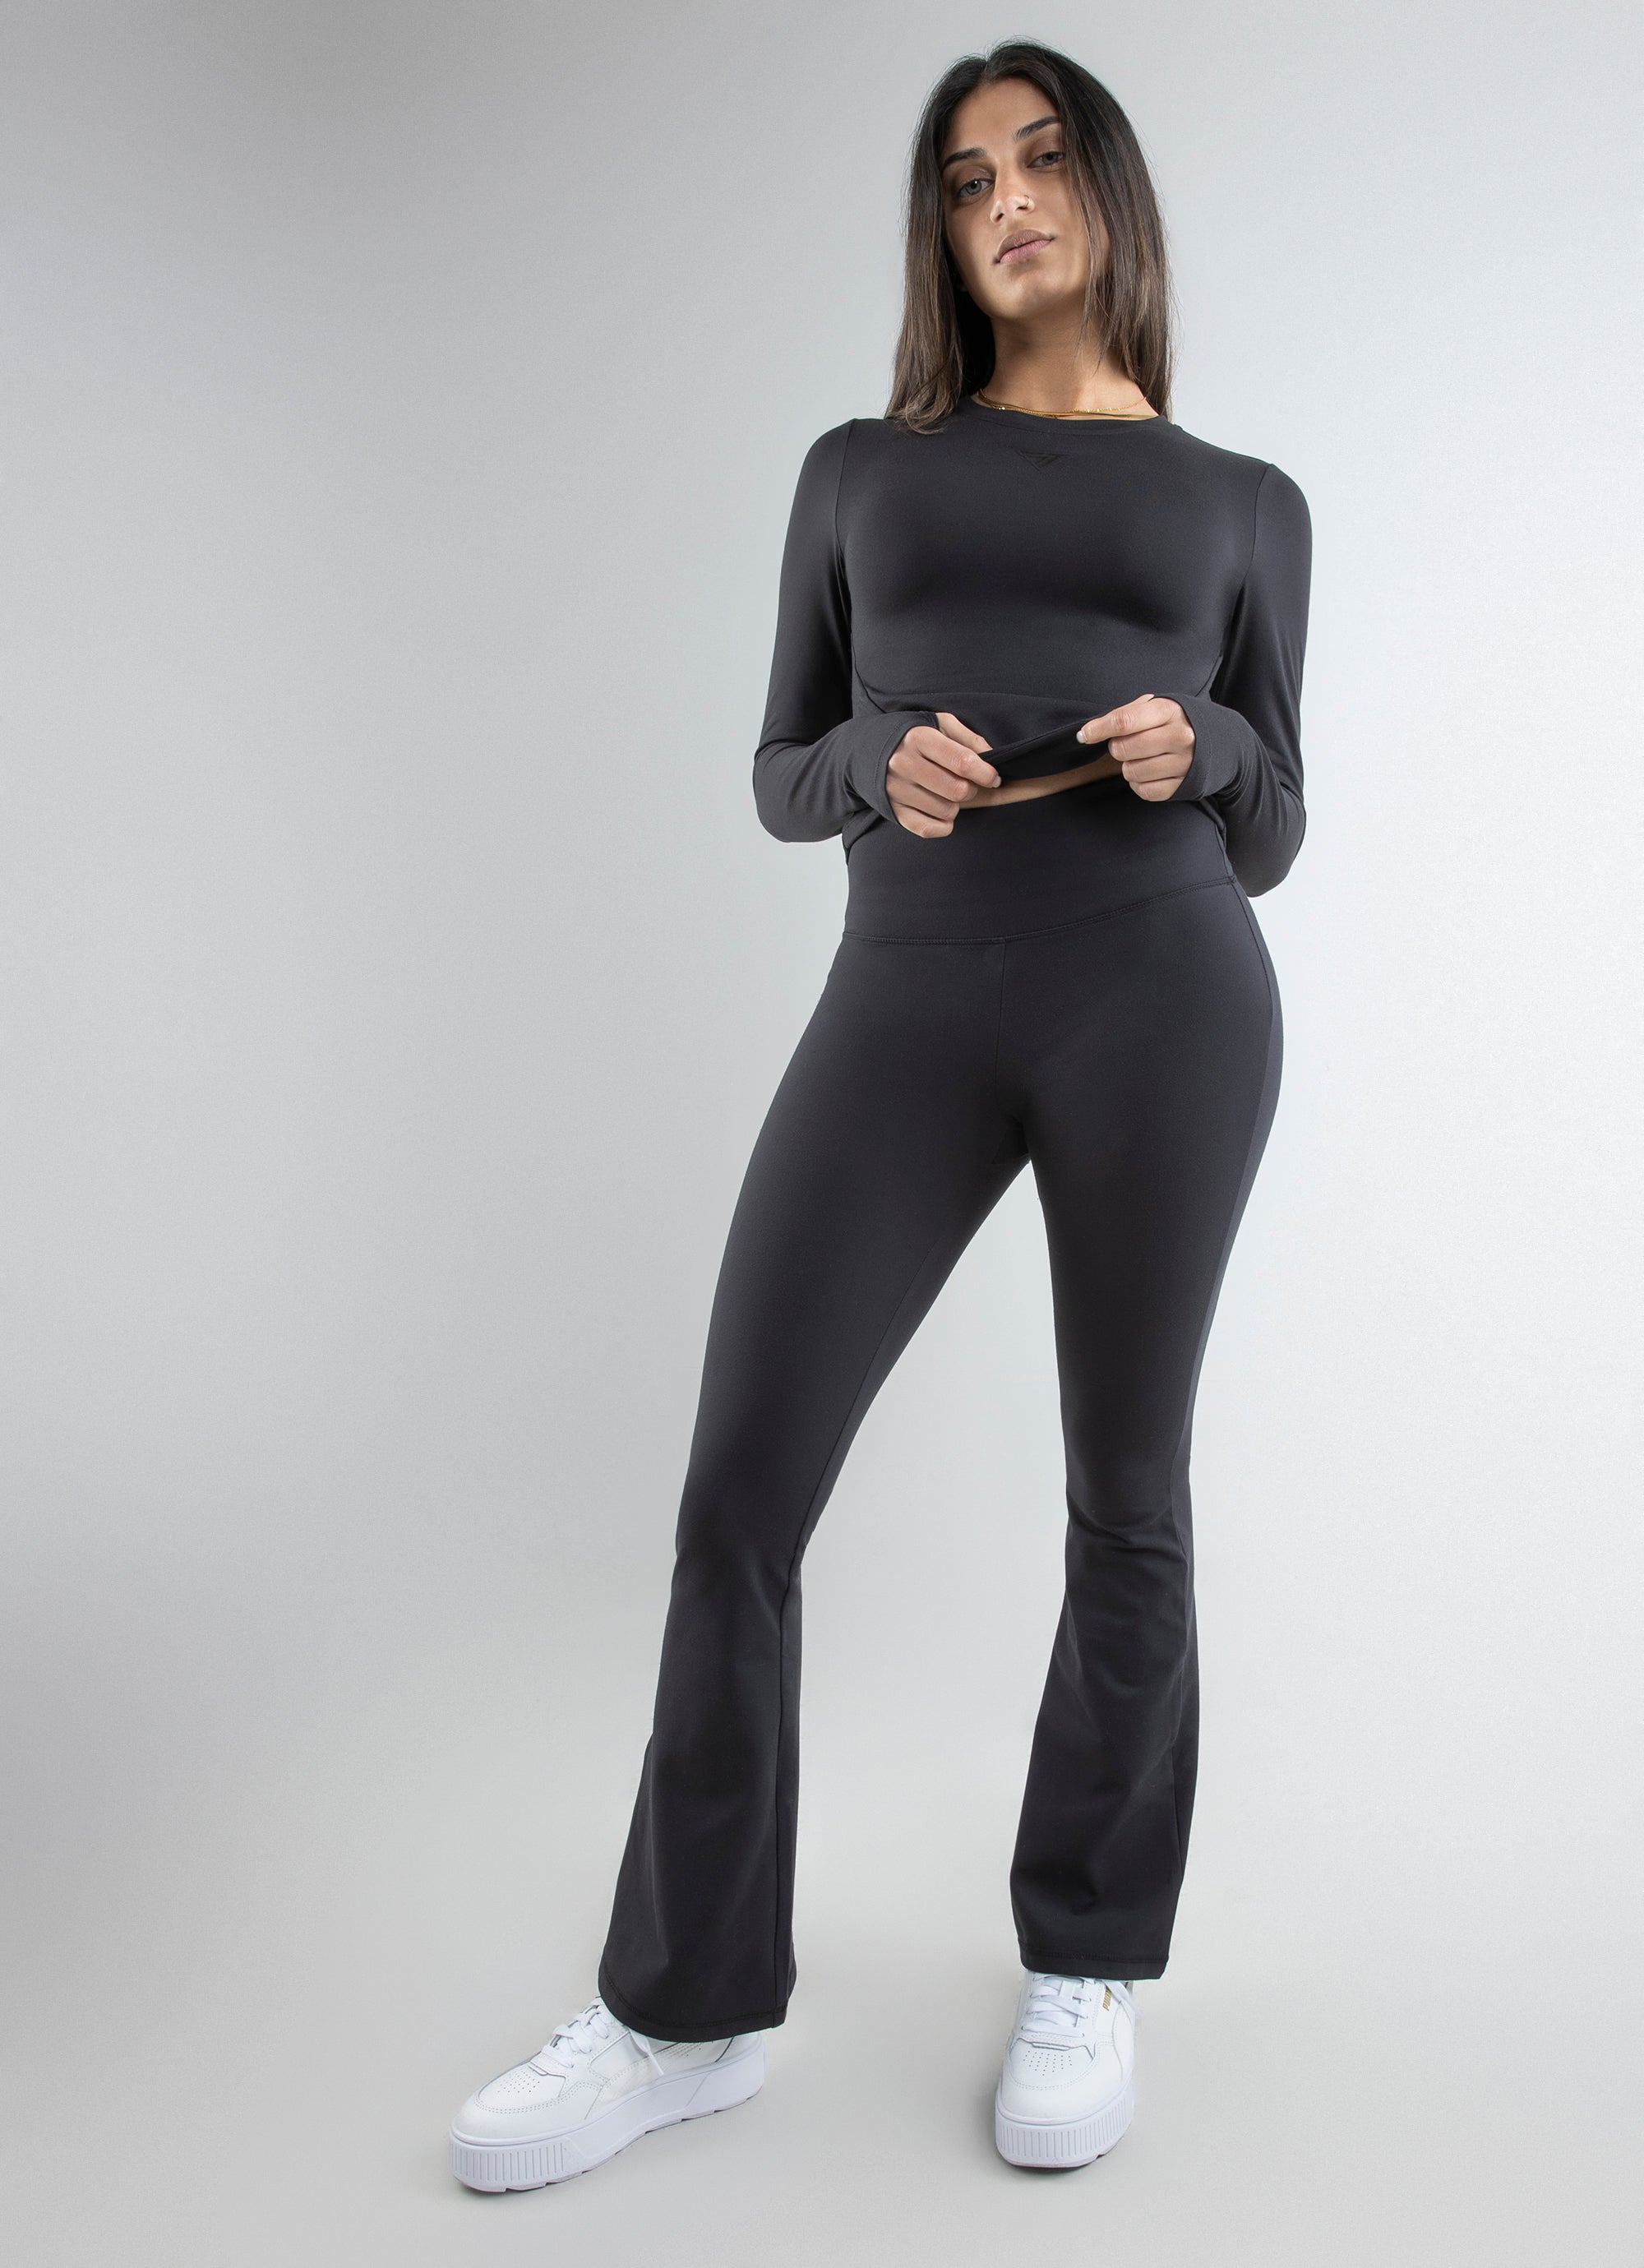 Alo Yoga - Black leggings with cool ribbed design on Designer Wardrobe